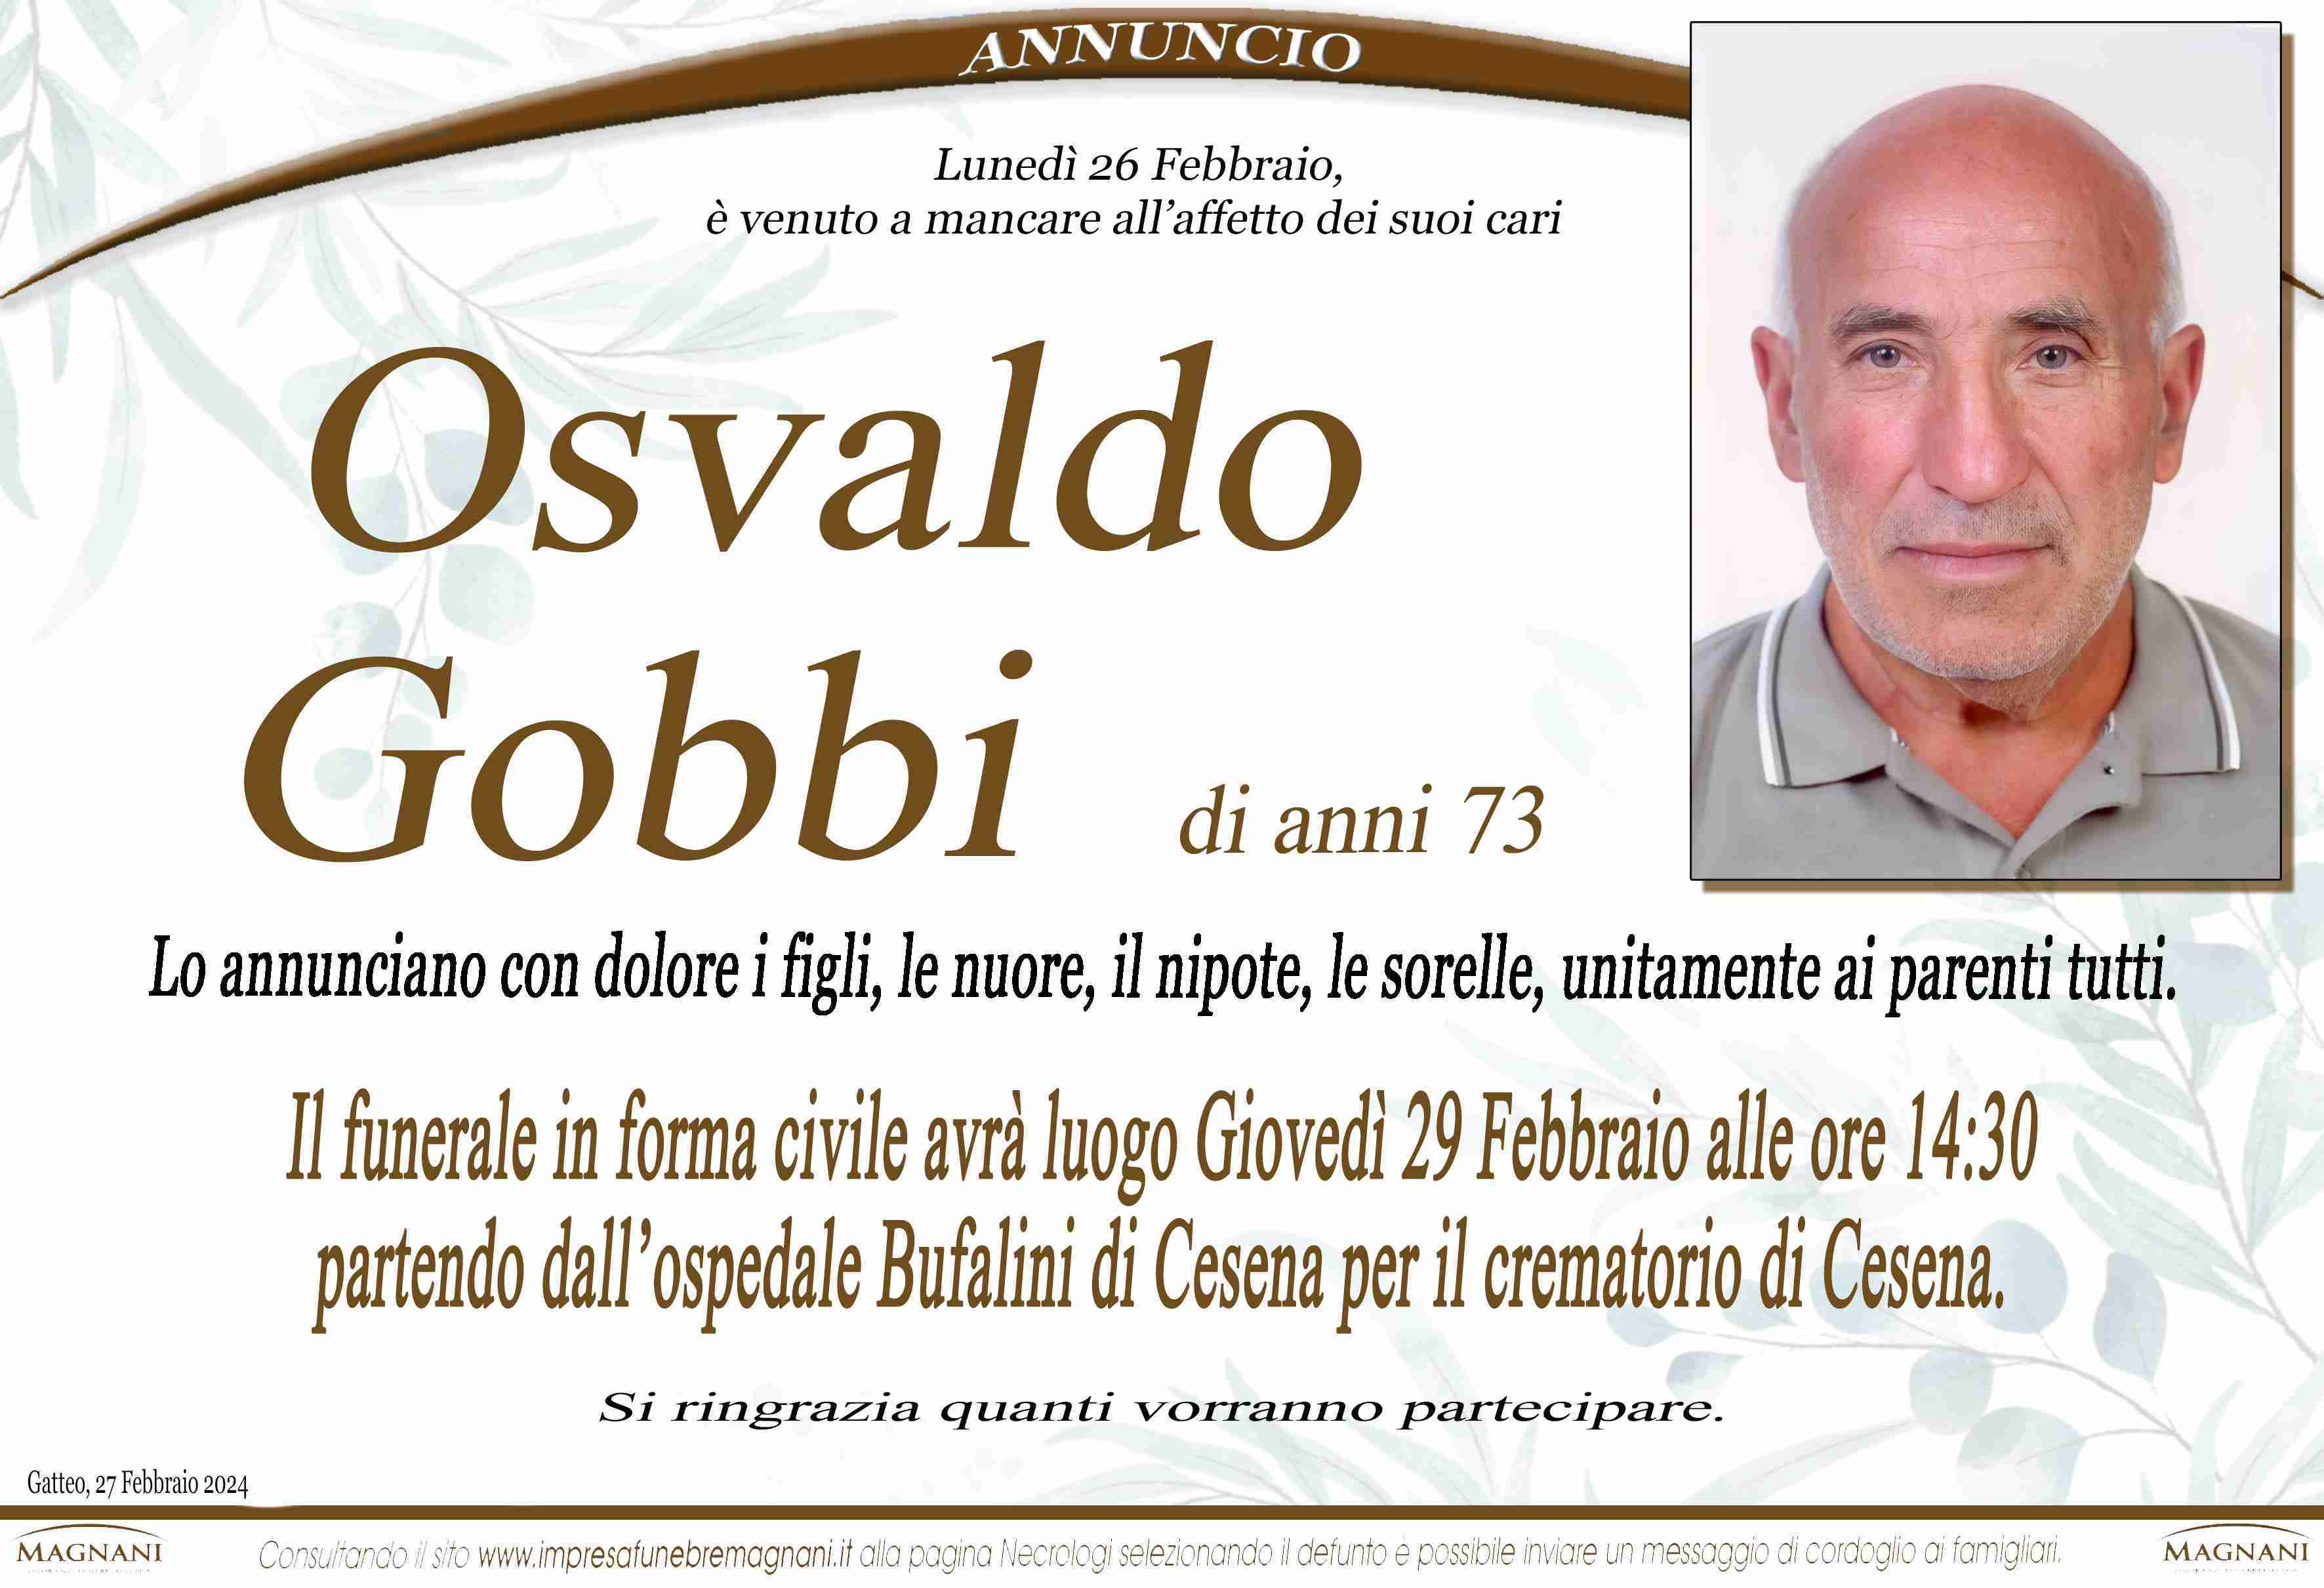 Osvaldo Gobbi